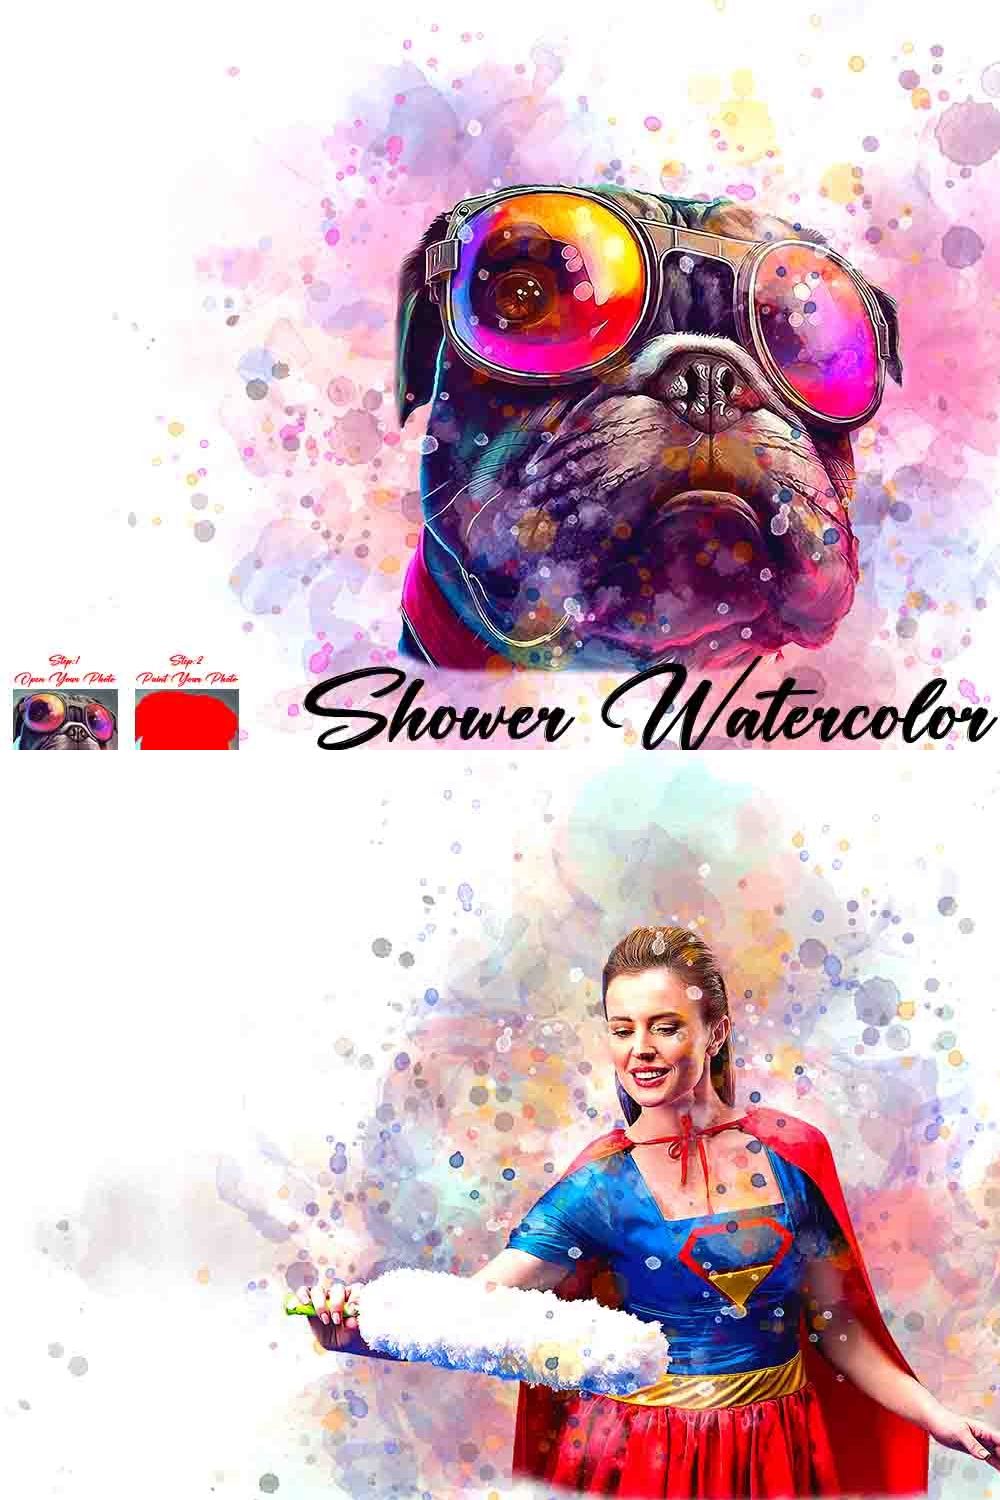 Shower Watercolor Photoshop Action pinterest preview image.